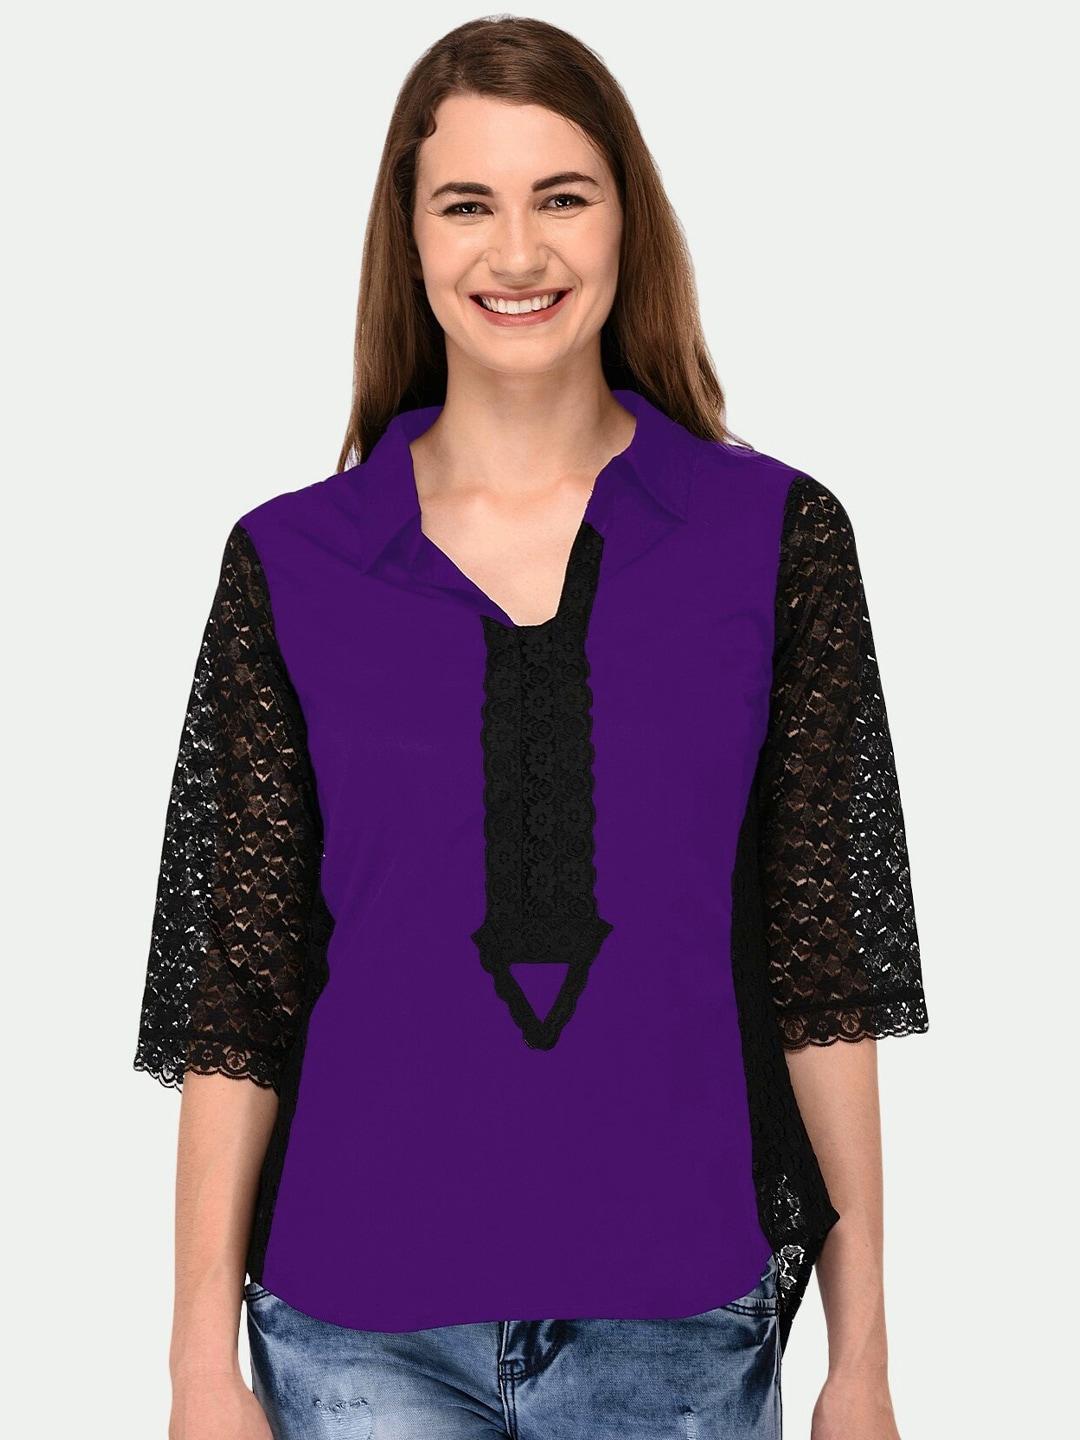 patrorna-women-purple-&-black-top